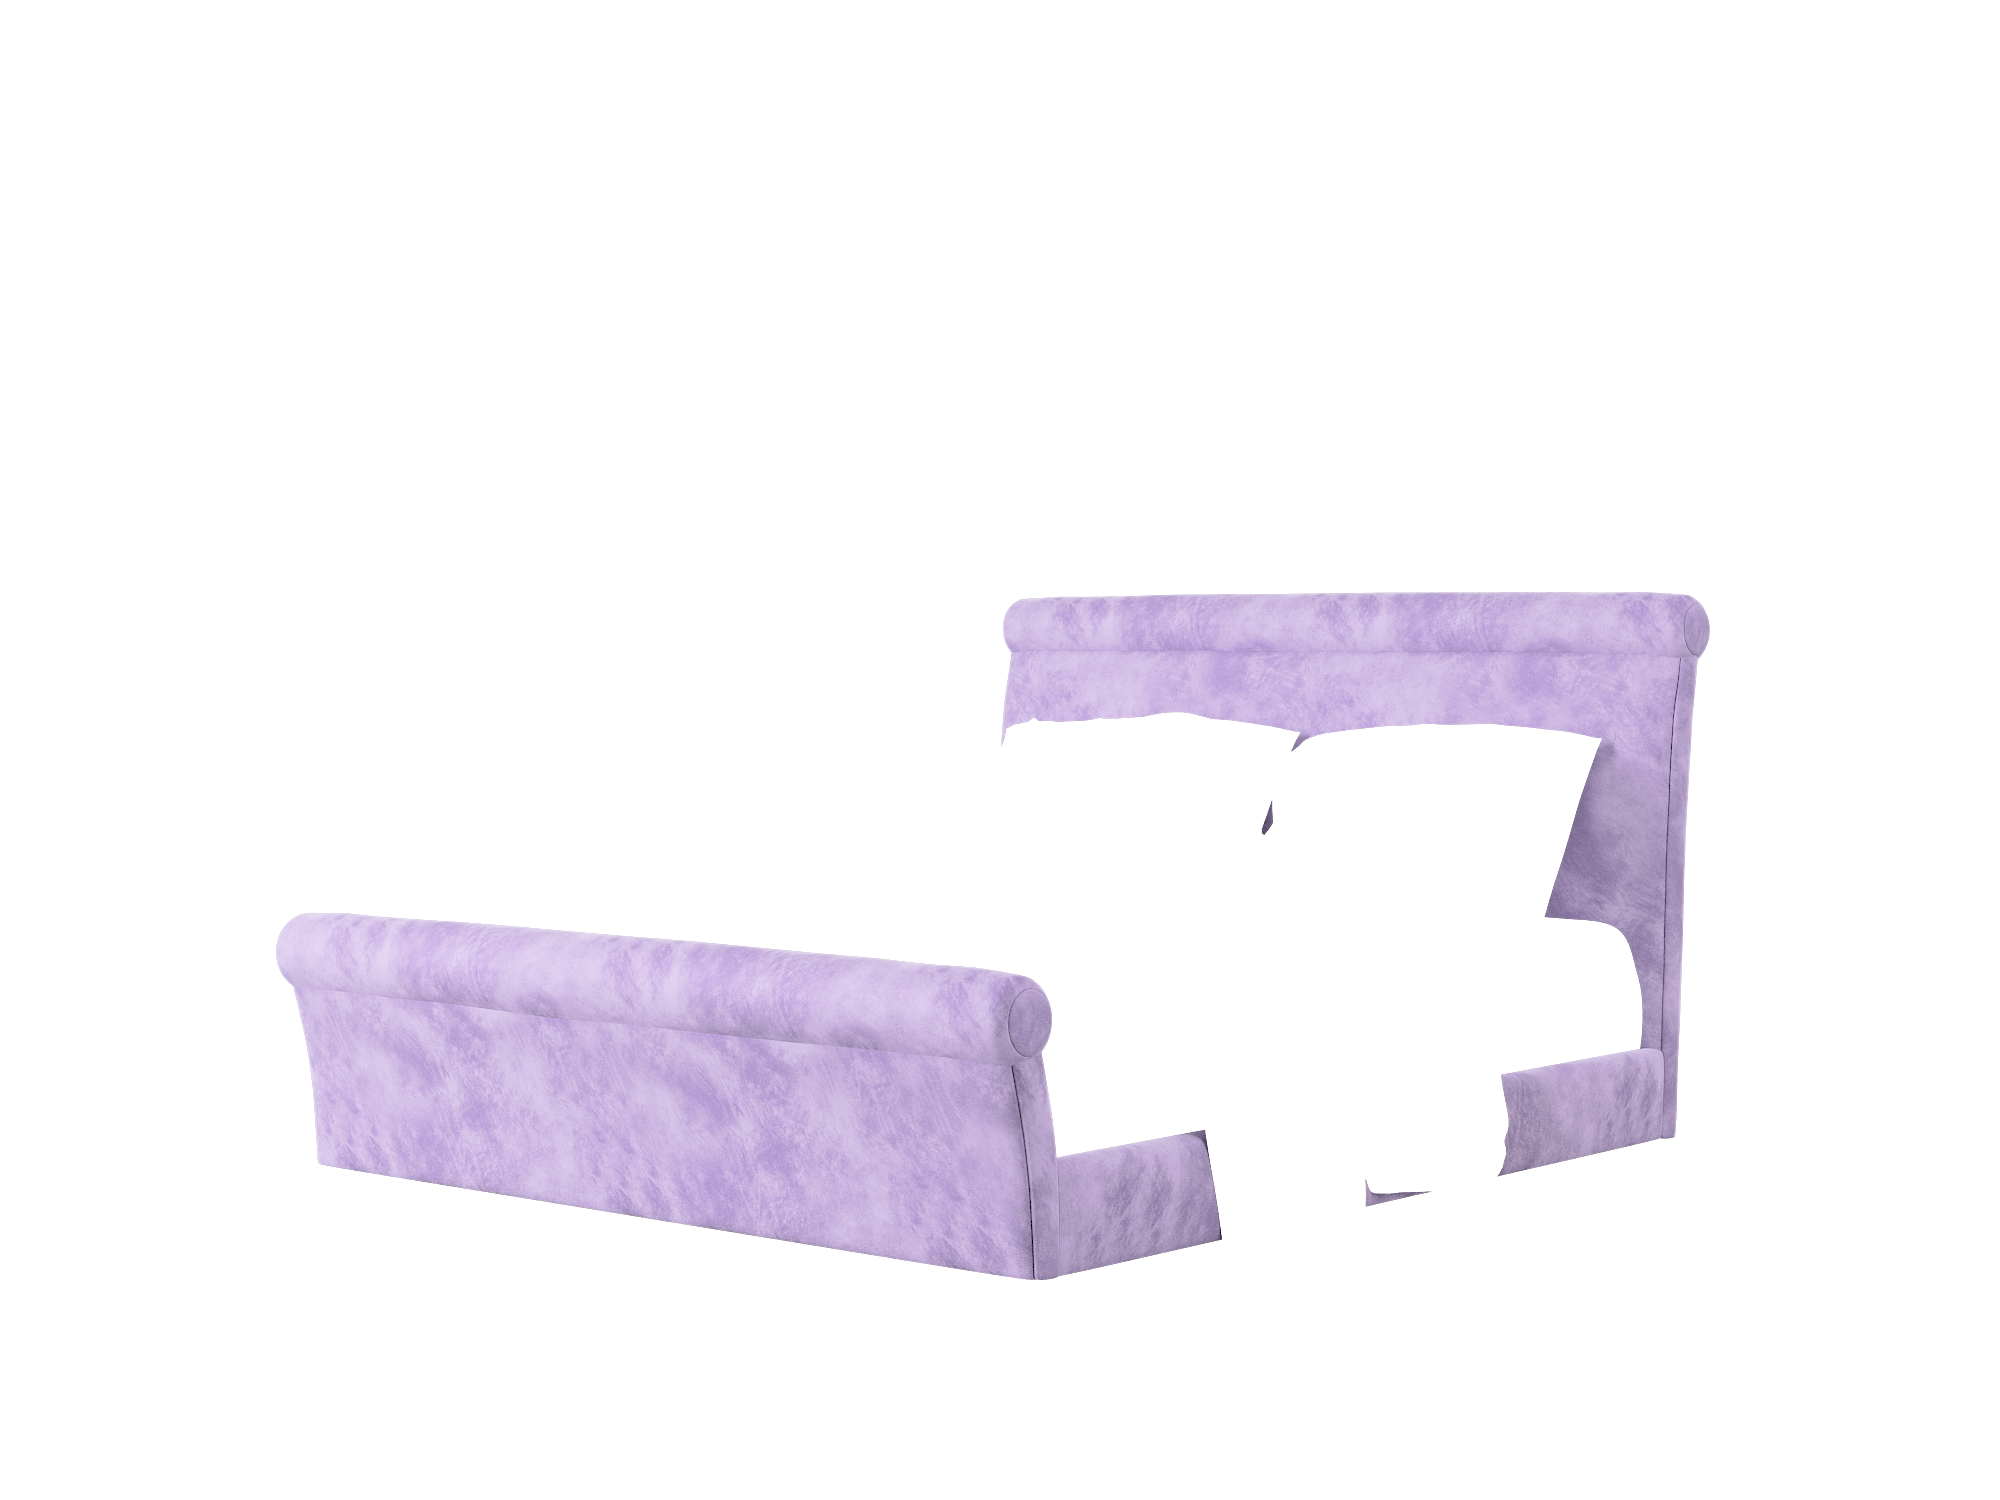 Maja Royale Lavender Bed King Room Texture